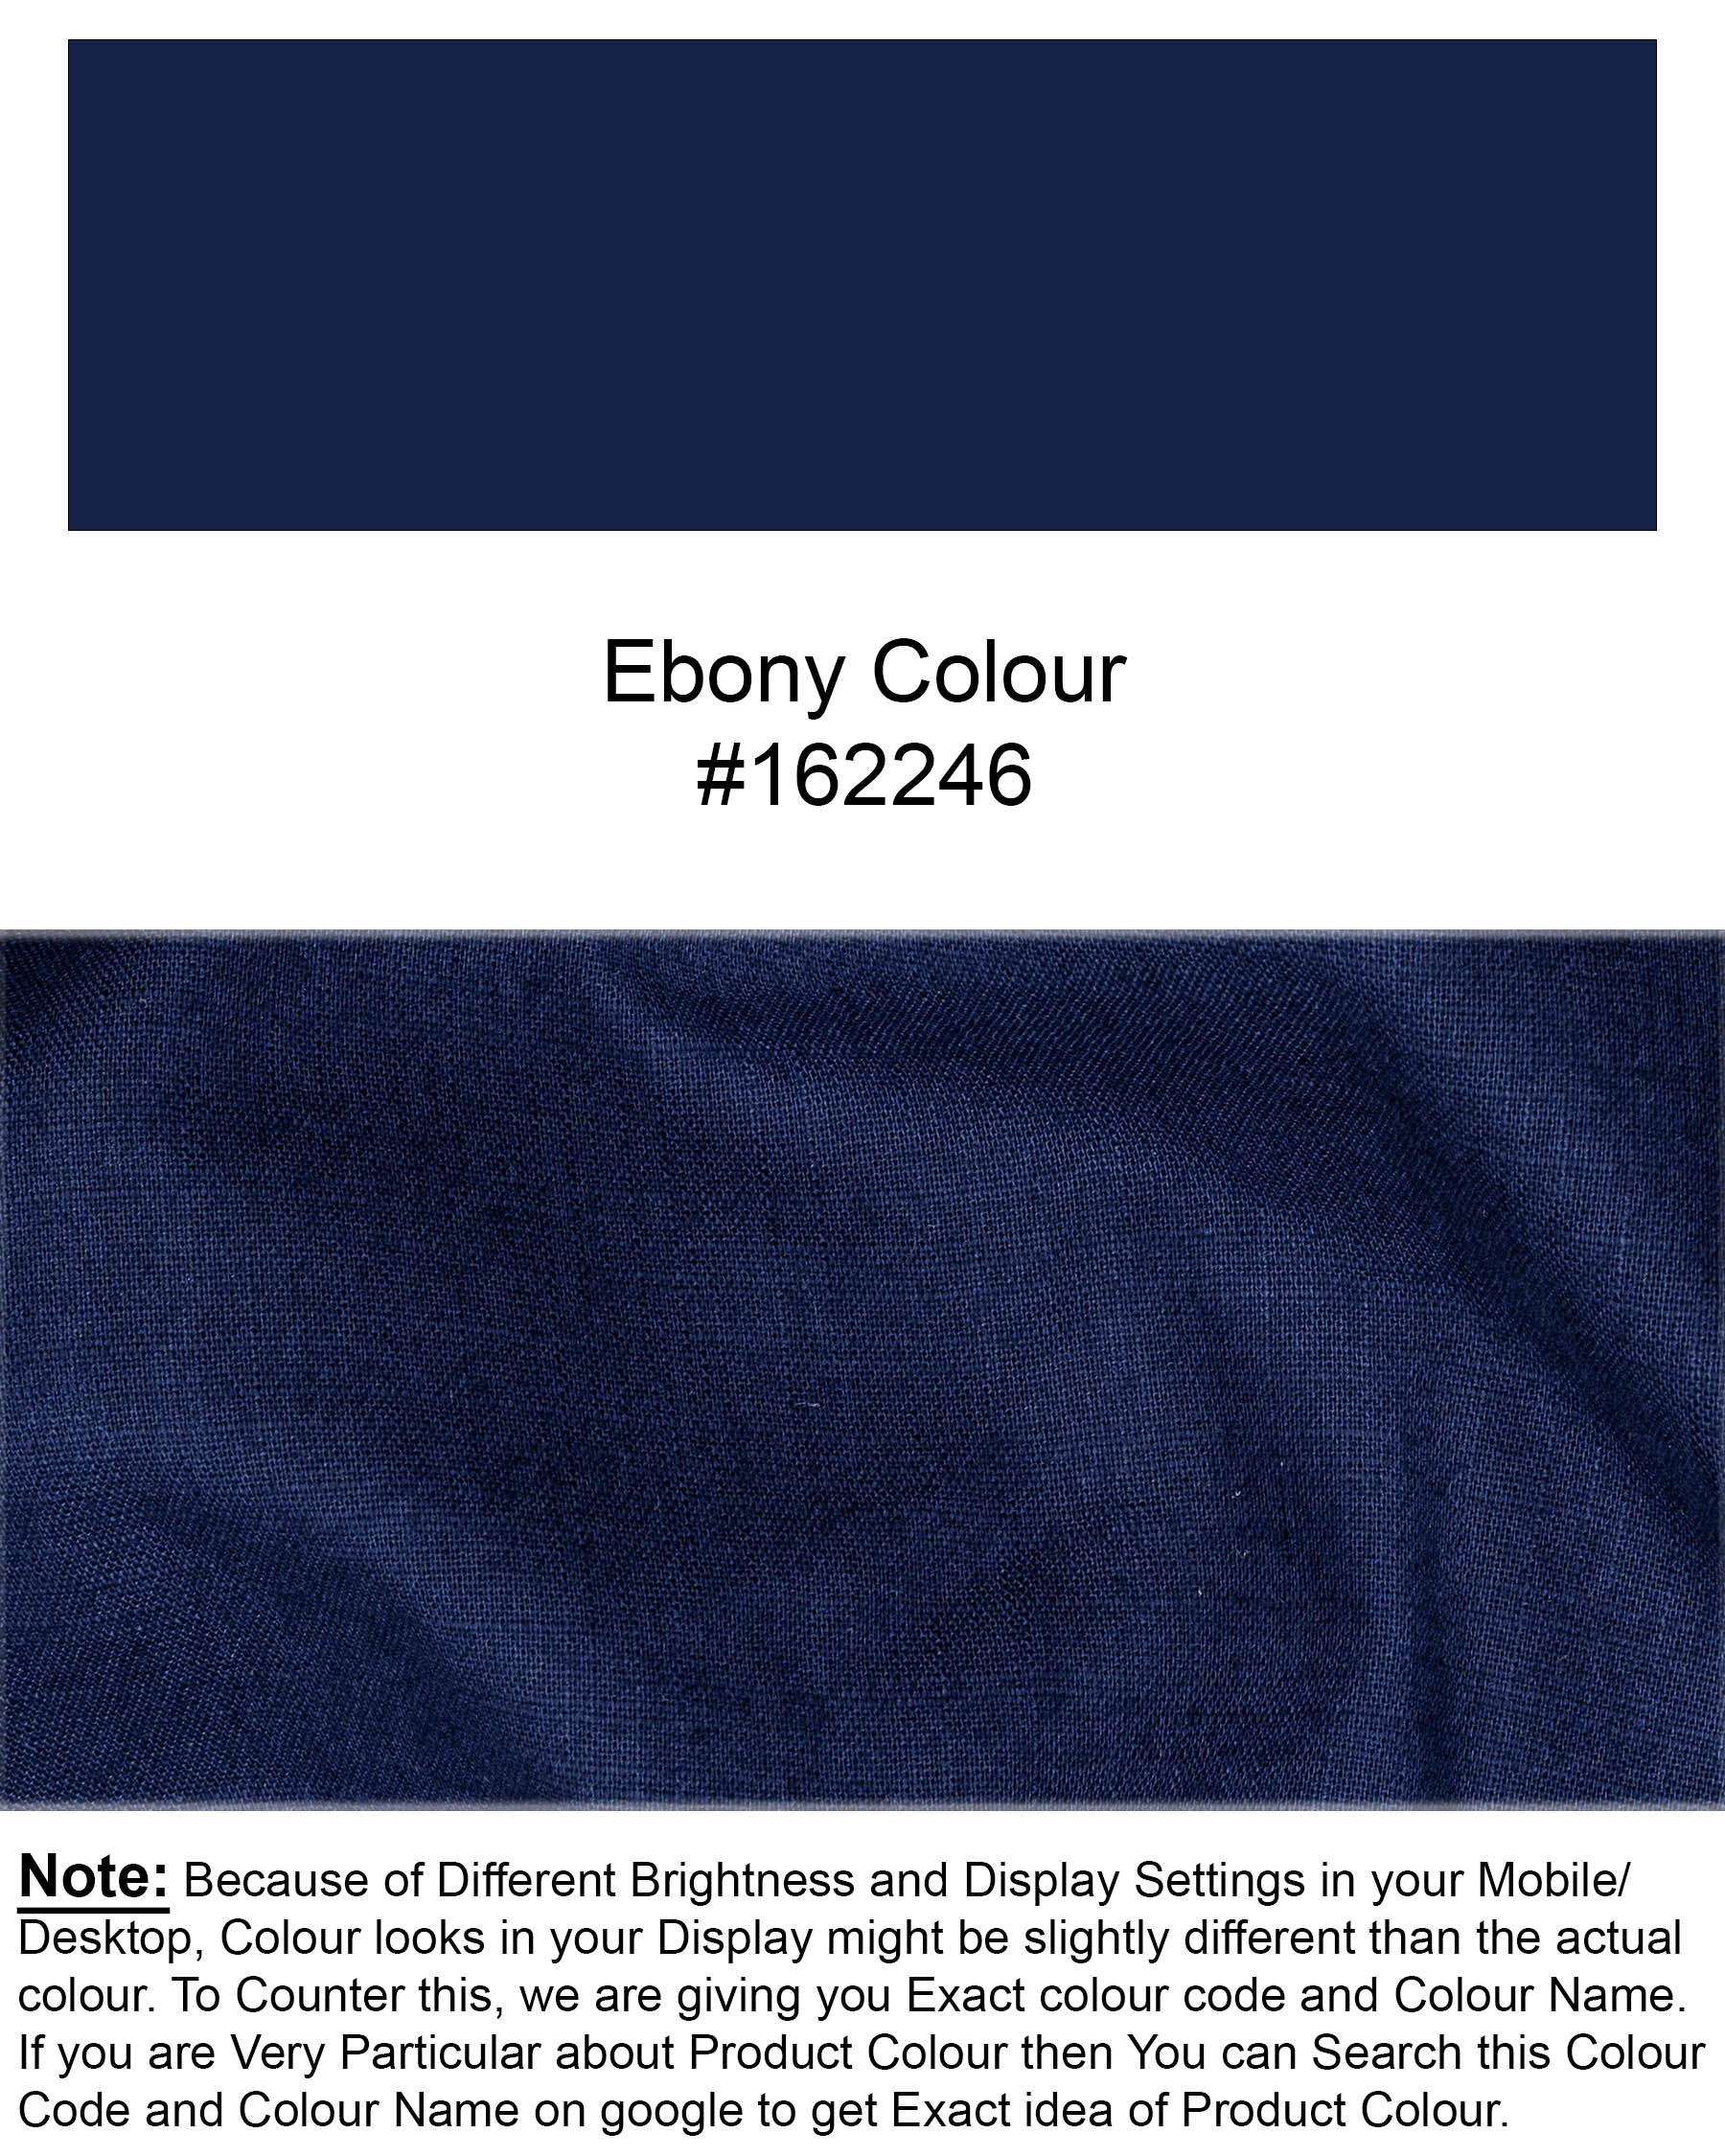 Ebony Clay Blue Royal Oxford Shirt 7118-M-38,7118-M-H-38,7118-M-39,7118-M-H-39,7118-M-40,7118-M-H-40,7118-M-42,7118-M-H-42,7118-M-44,7118-M-H-44,7118-M-46,7118-M-H-46,7118-M-48,7118-M-H-48,7118-M-50,7118-M-H-50,7118-M-52,7118-M-H-52